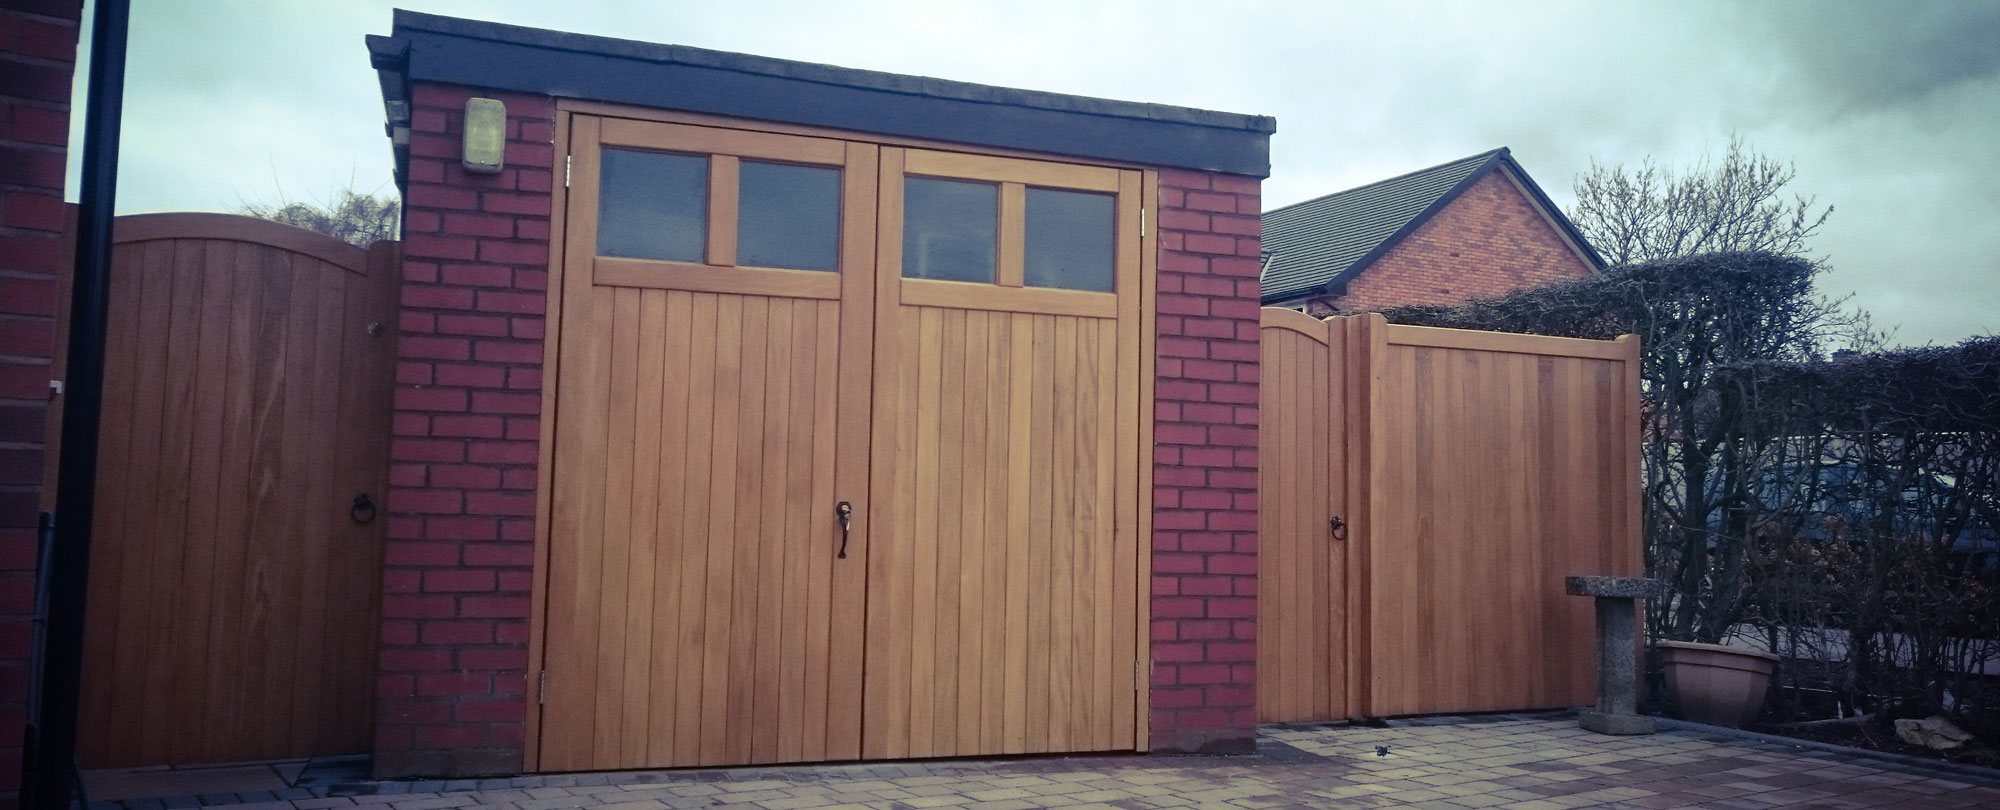 oak wood garage doors